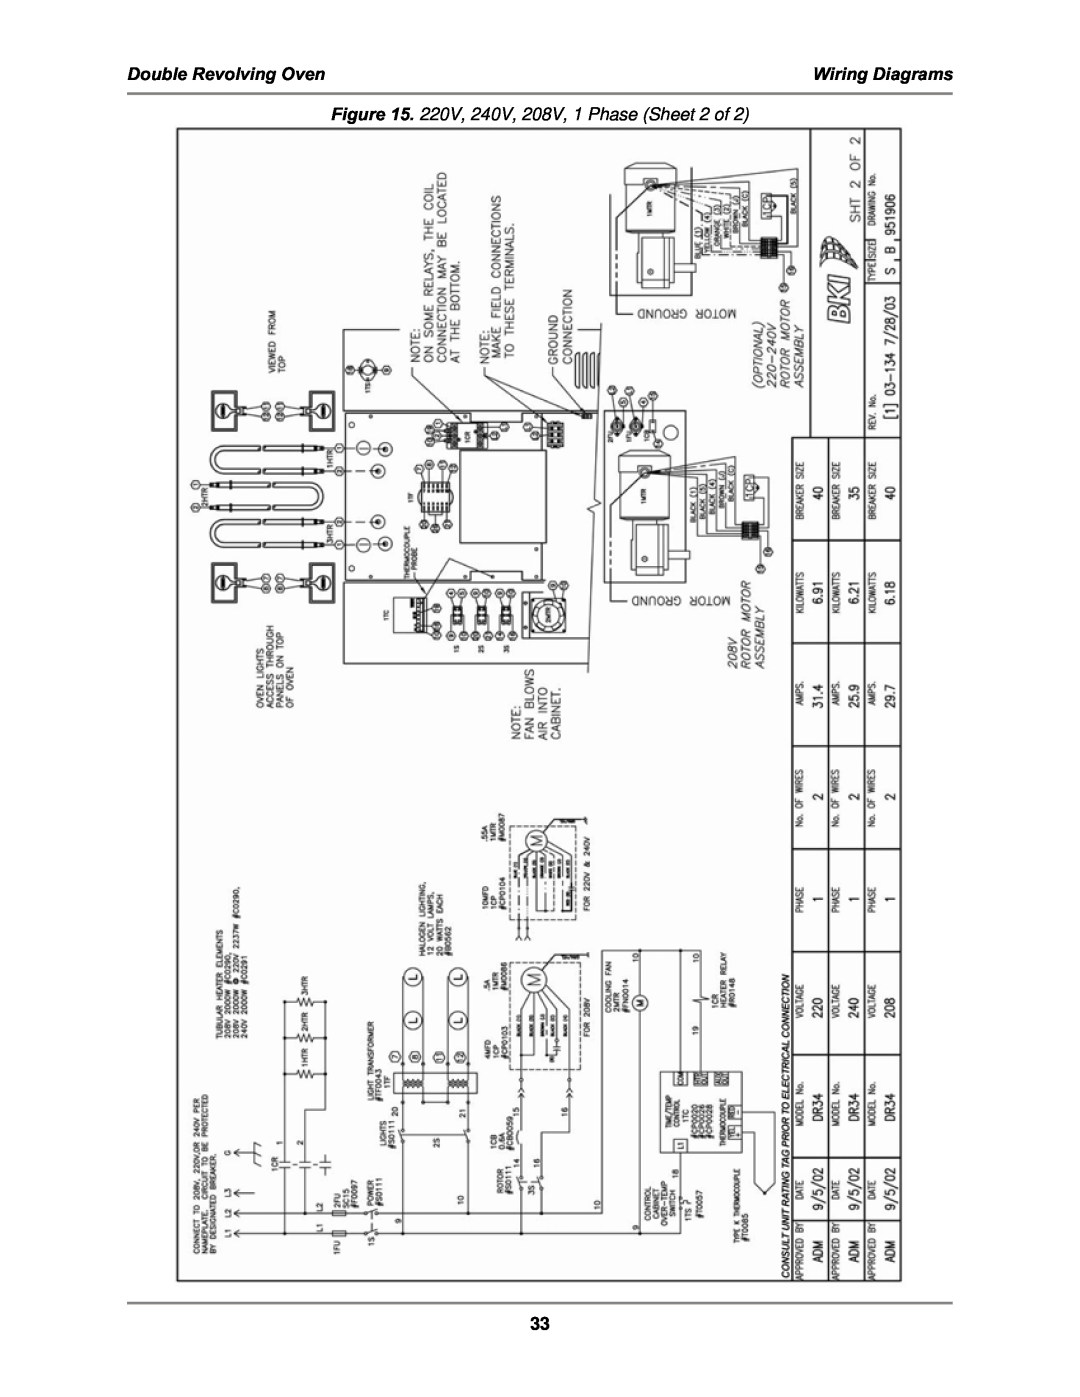 Bakers Pride Oven DR-34 service manual Double Revolving Oven, Wiring Diagrams, 220V, 240V, 208V, 1 Phase Sheet 2 of 